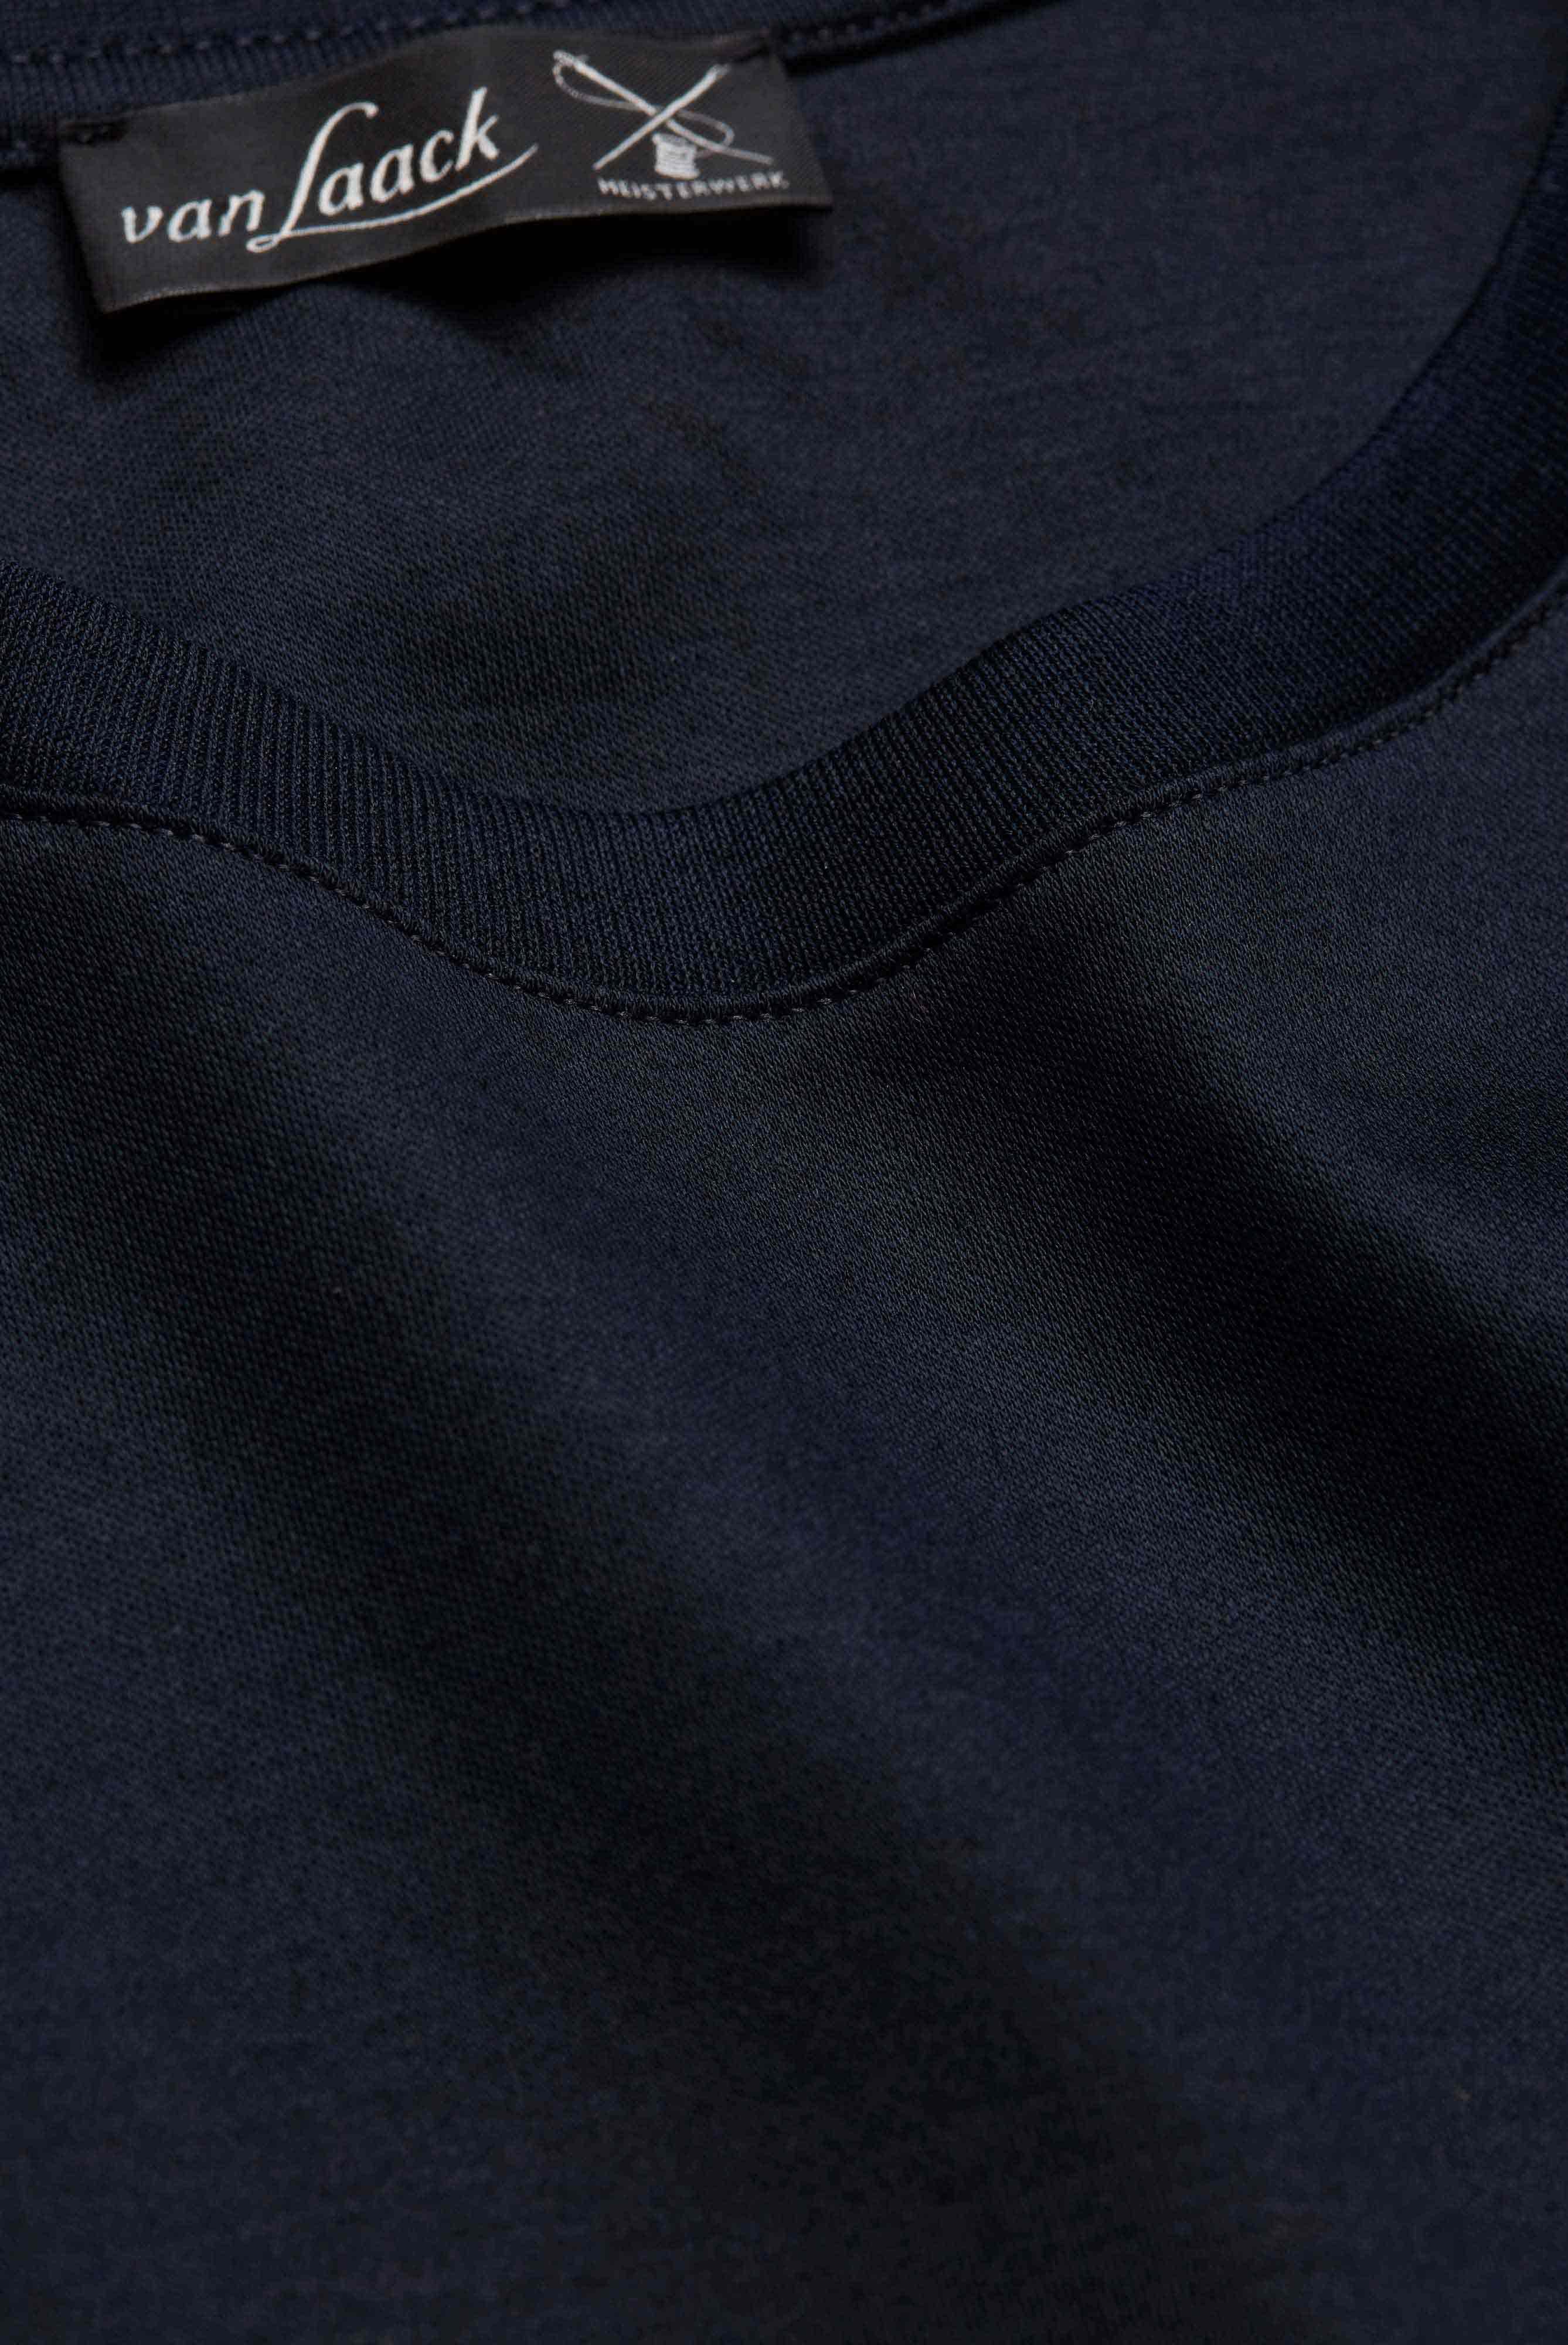 T-Shirts+Swiss Cotton Jersey Crew Neck T-Shirt+20.1717.UX.180031.790.S